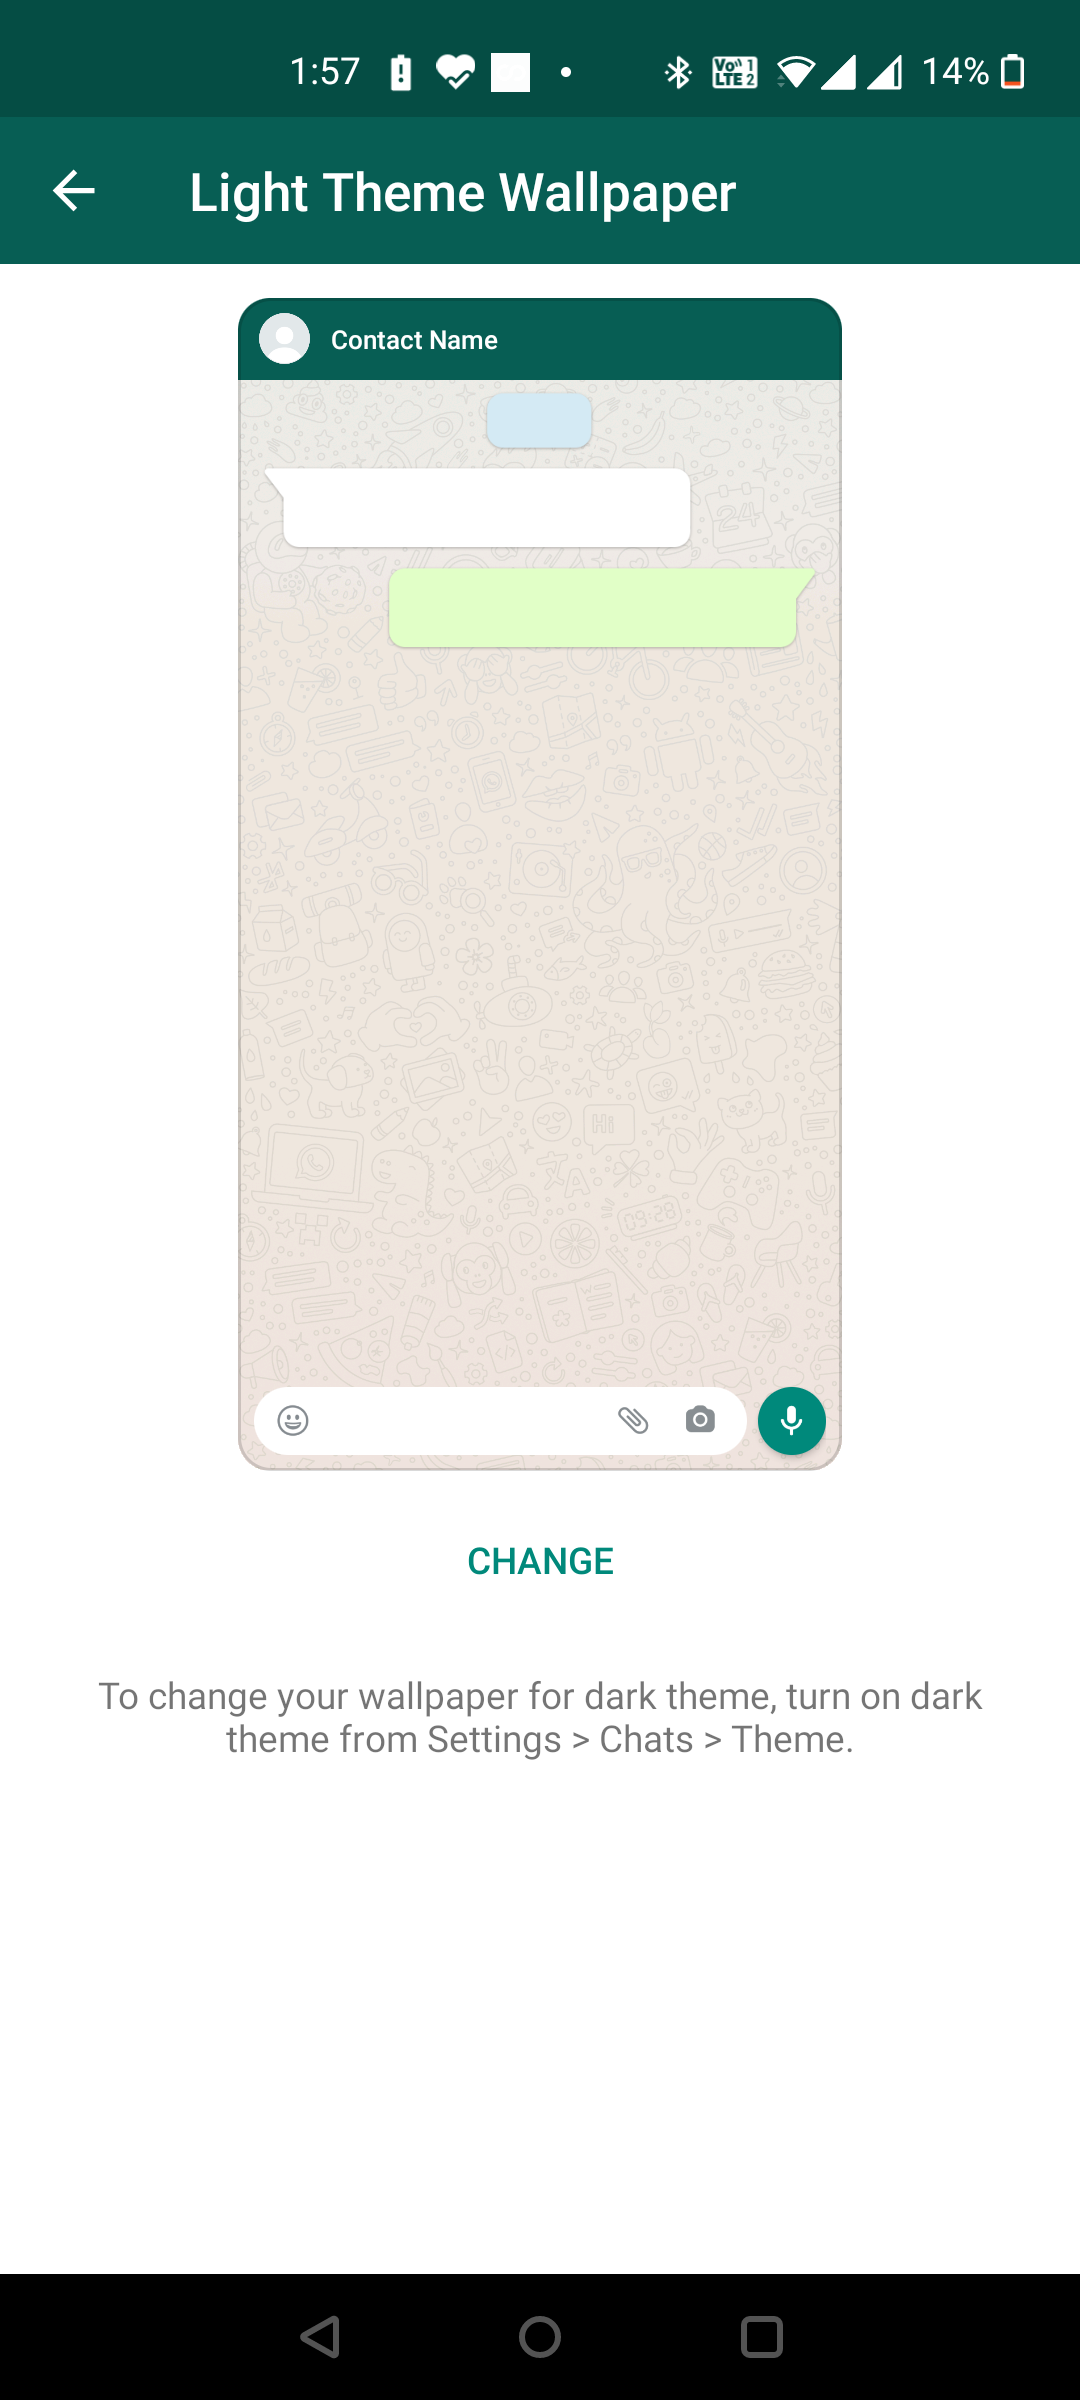 Change the WhatsApp chat wallpaper